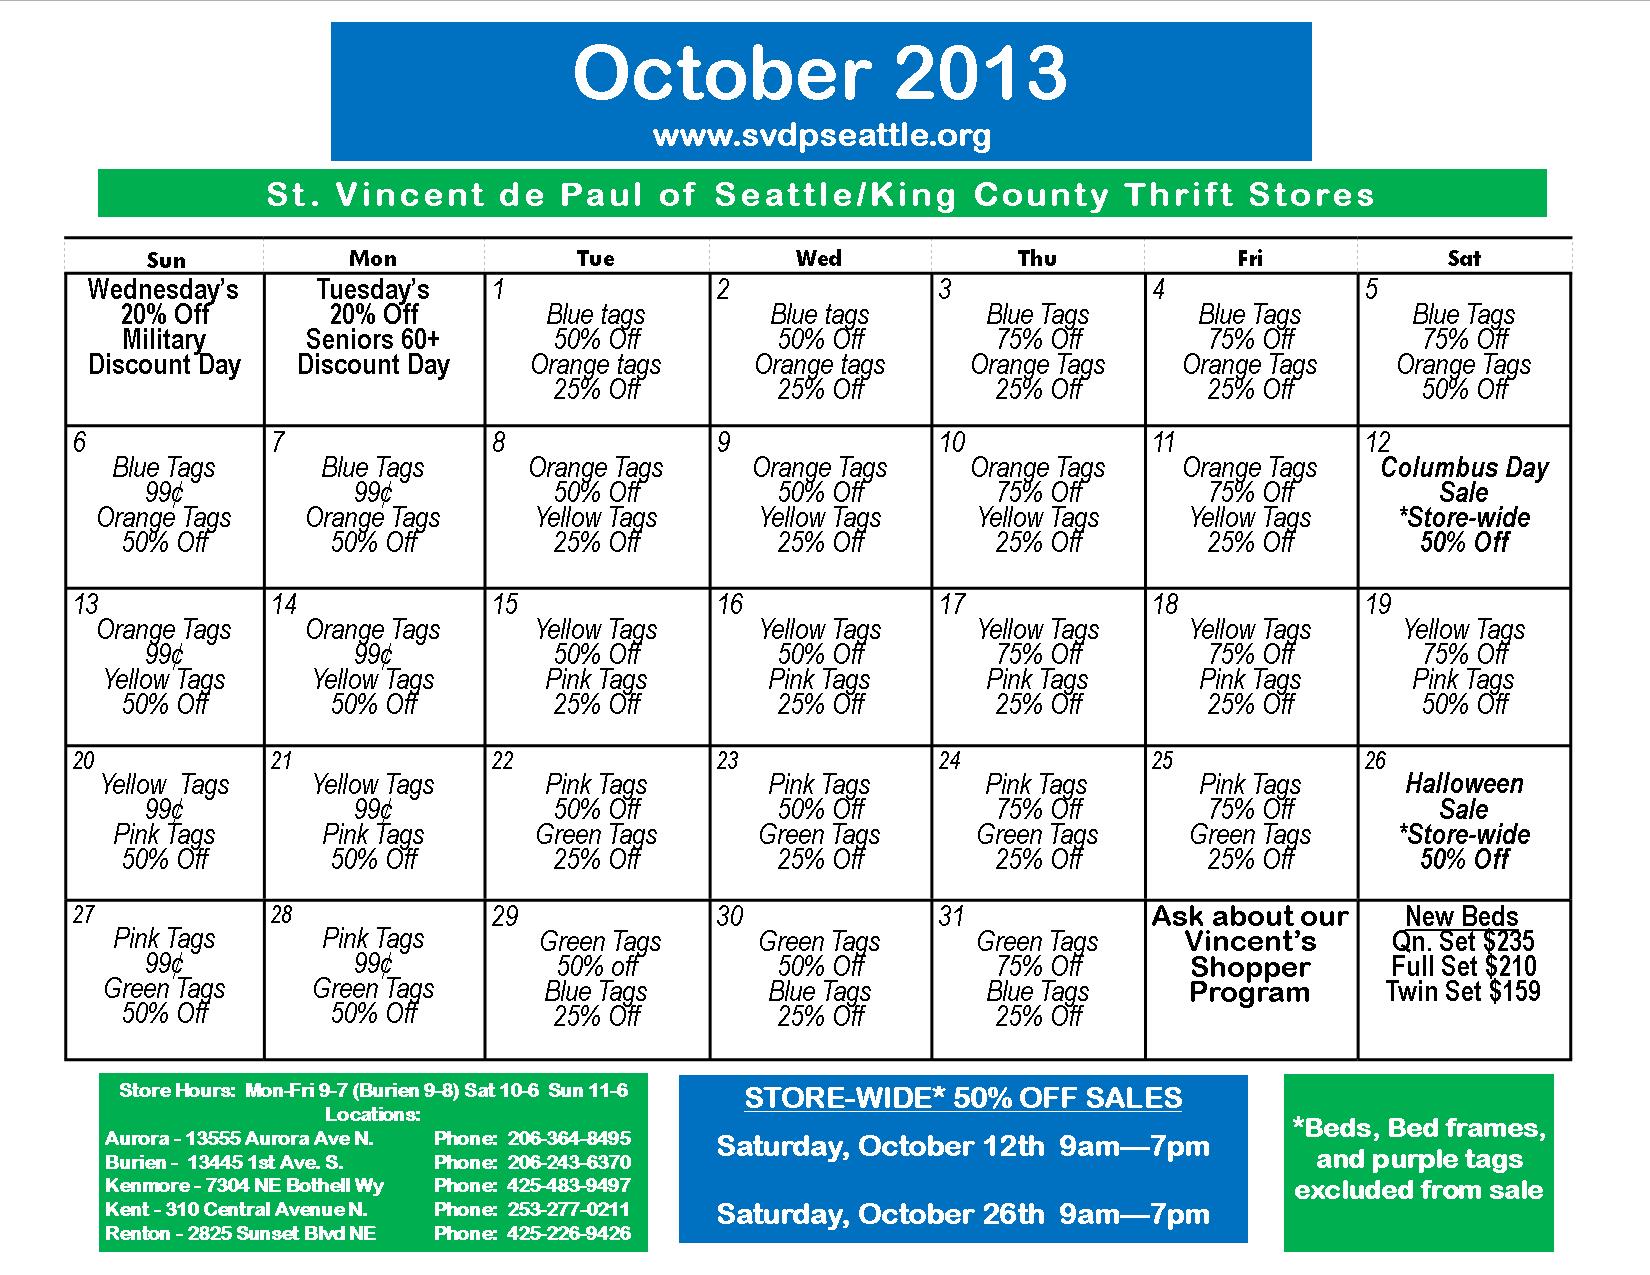 October Sales Calendar St. Vincent de Paul